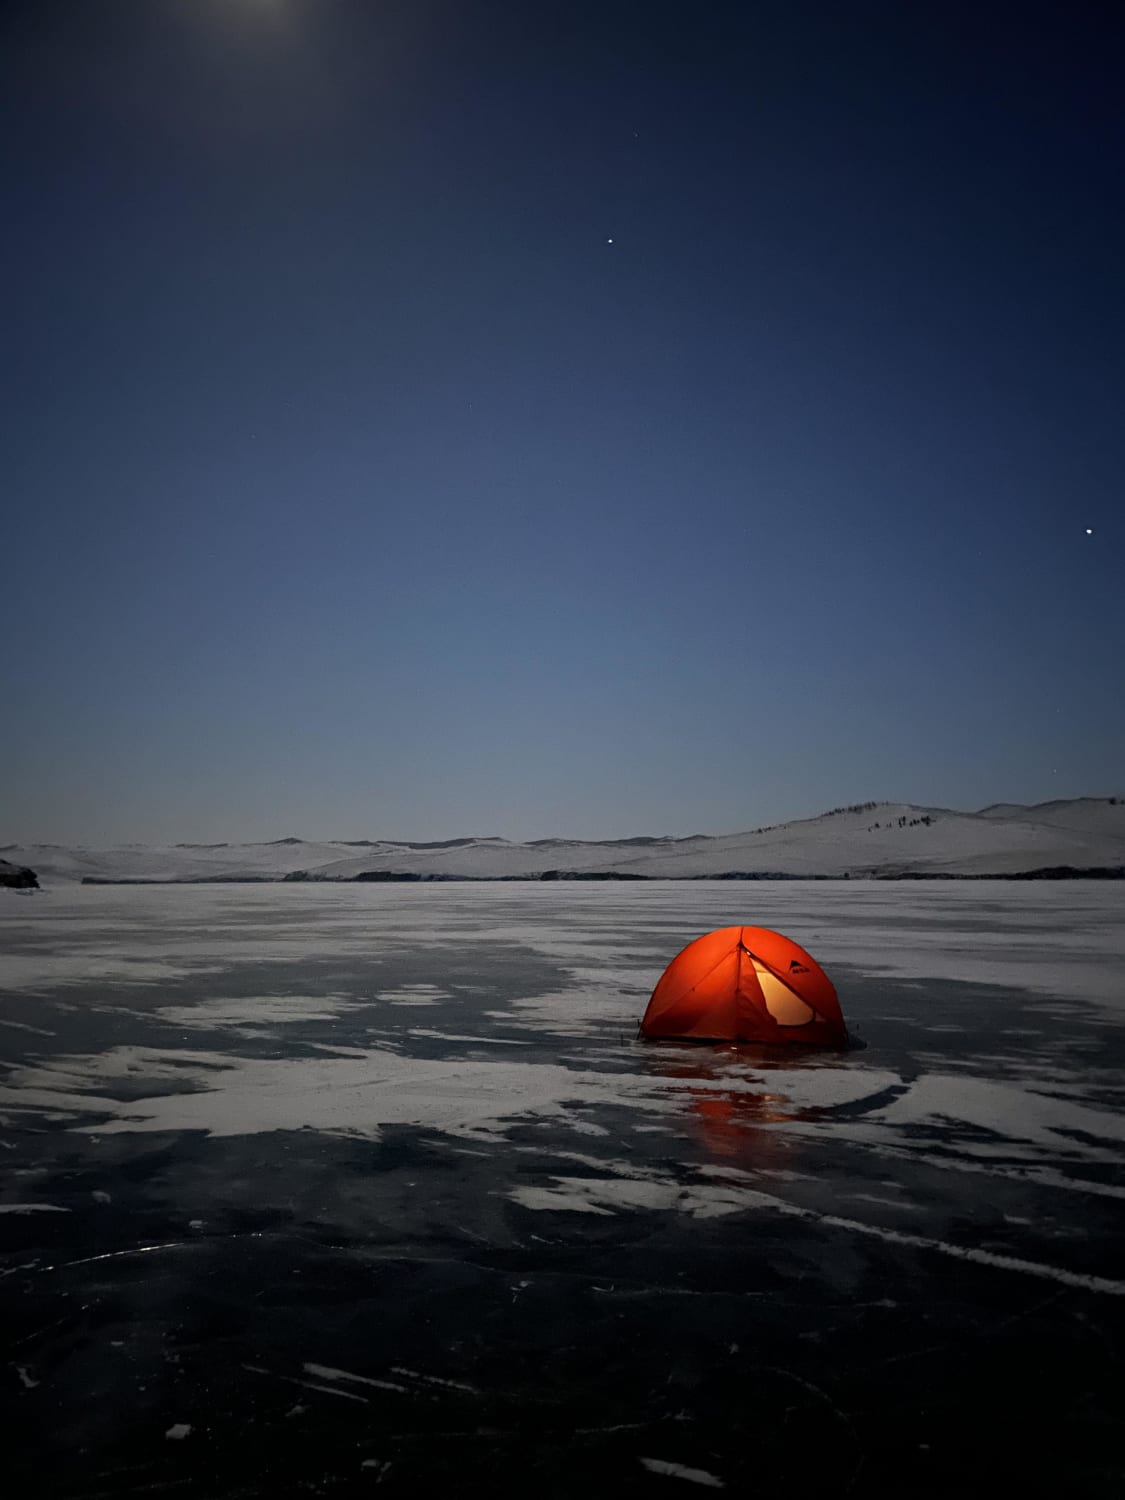 It was my first experience of sleeping on ice. Feb. 2021, Lake Baikal, -25°C